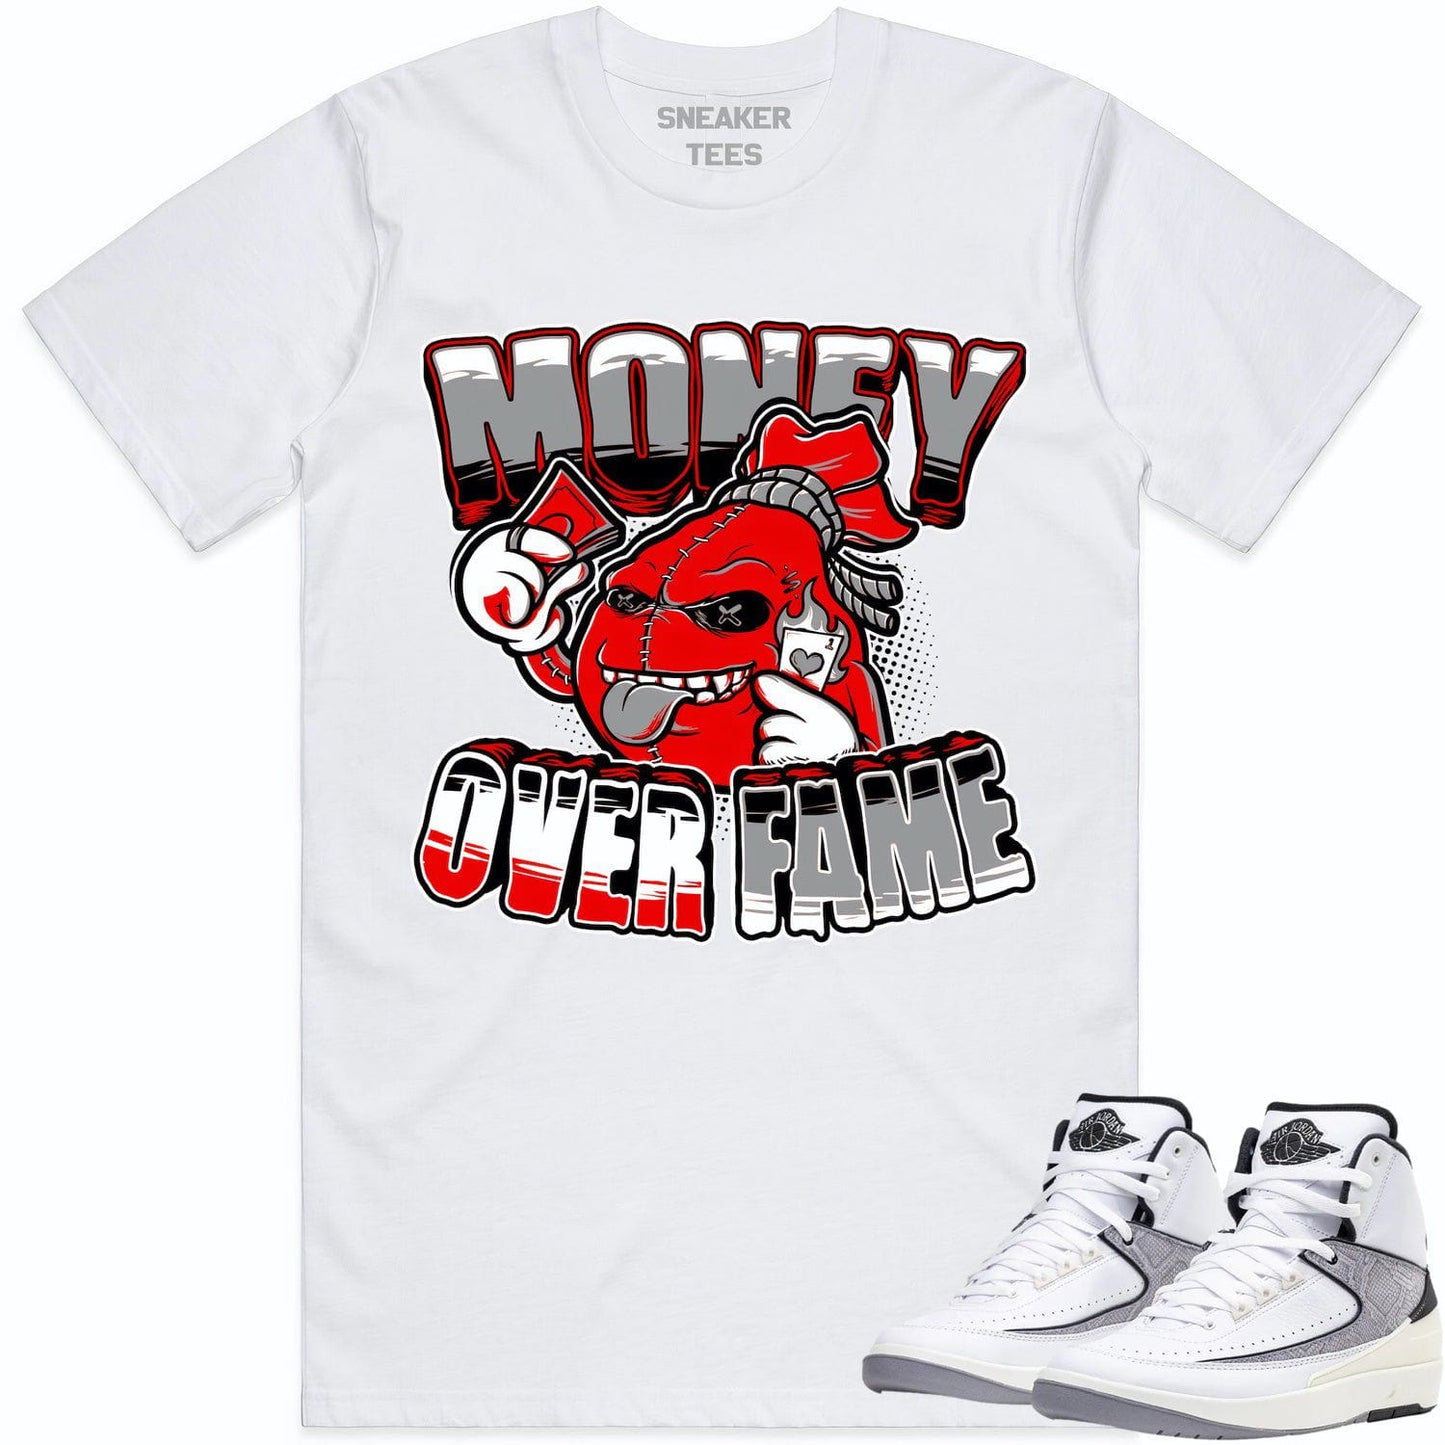 Python 2s Shirts - Jordan Retro 2 Python 2s Sneaker Tees - Money Fame